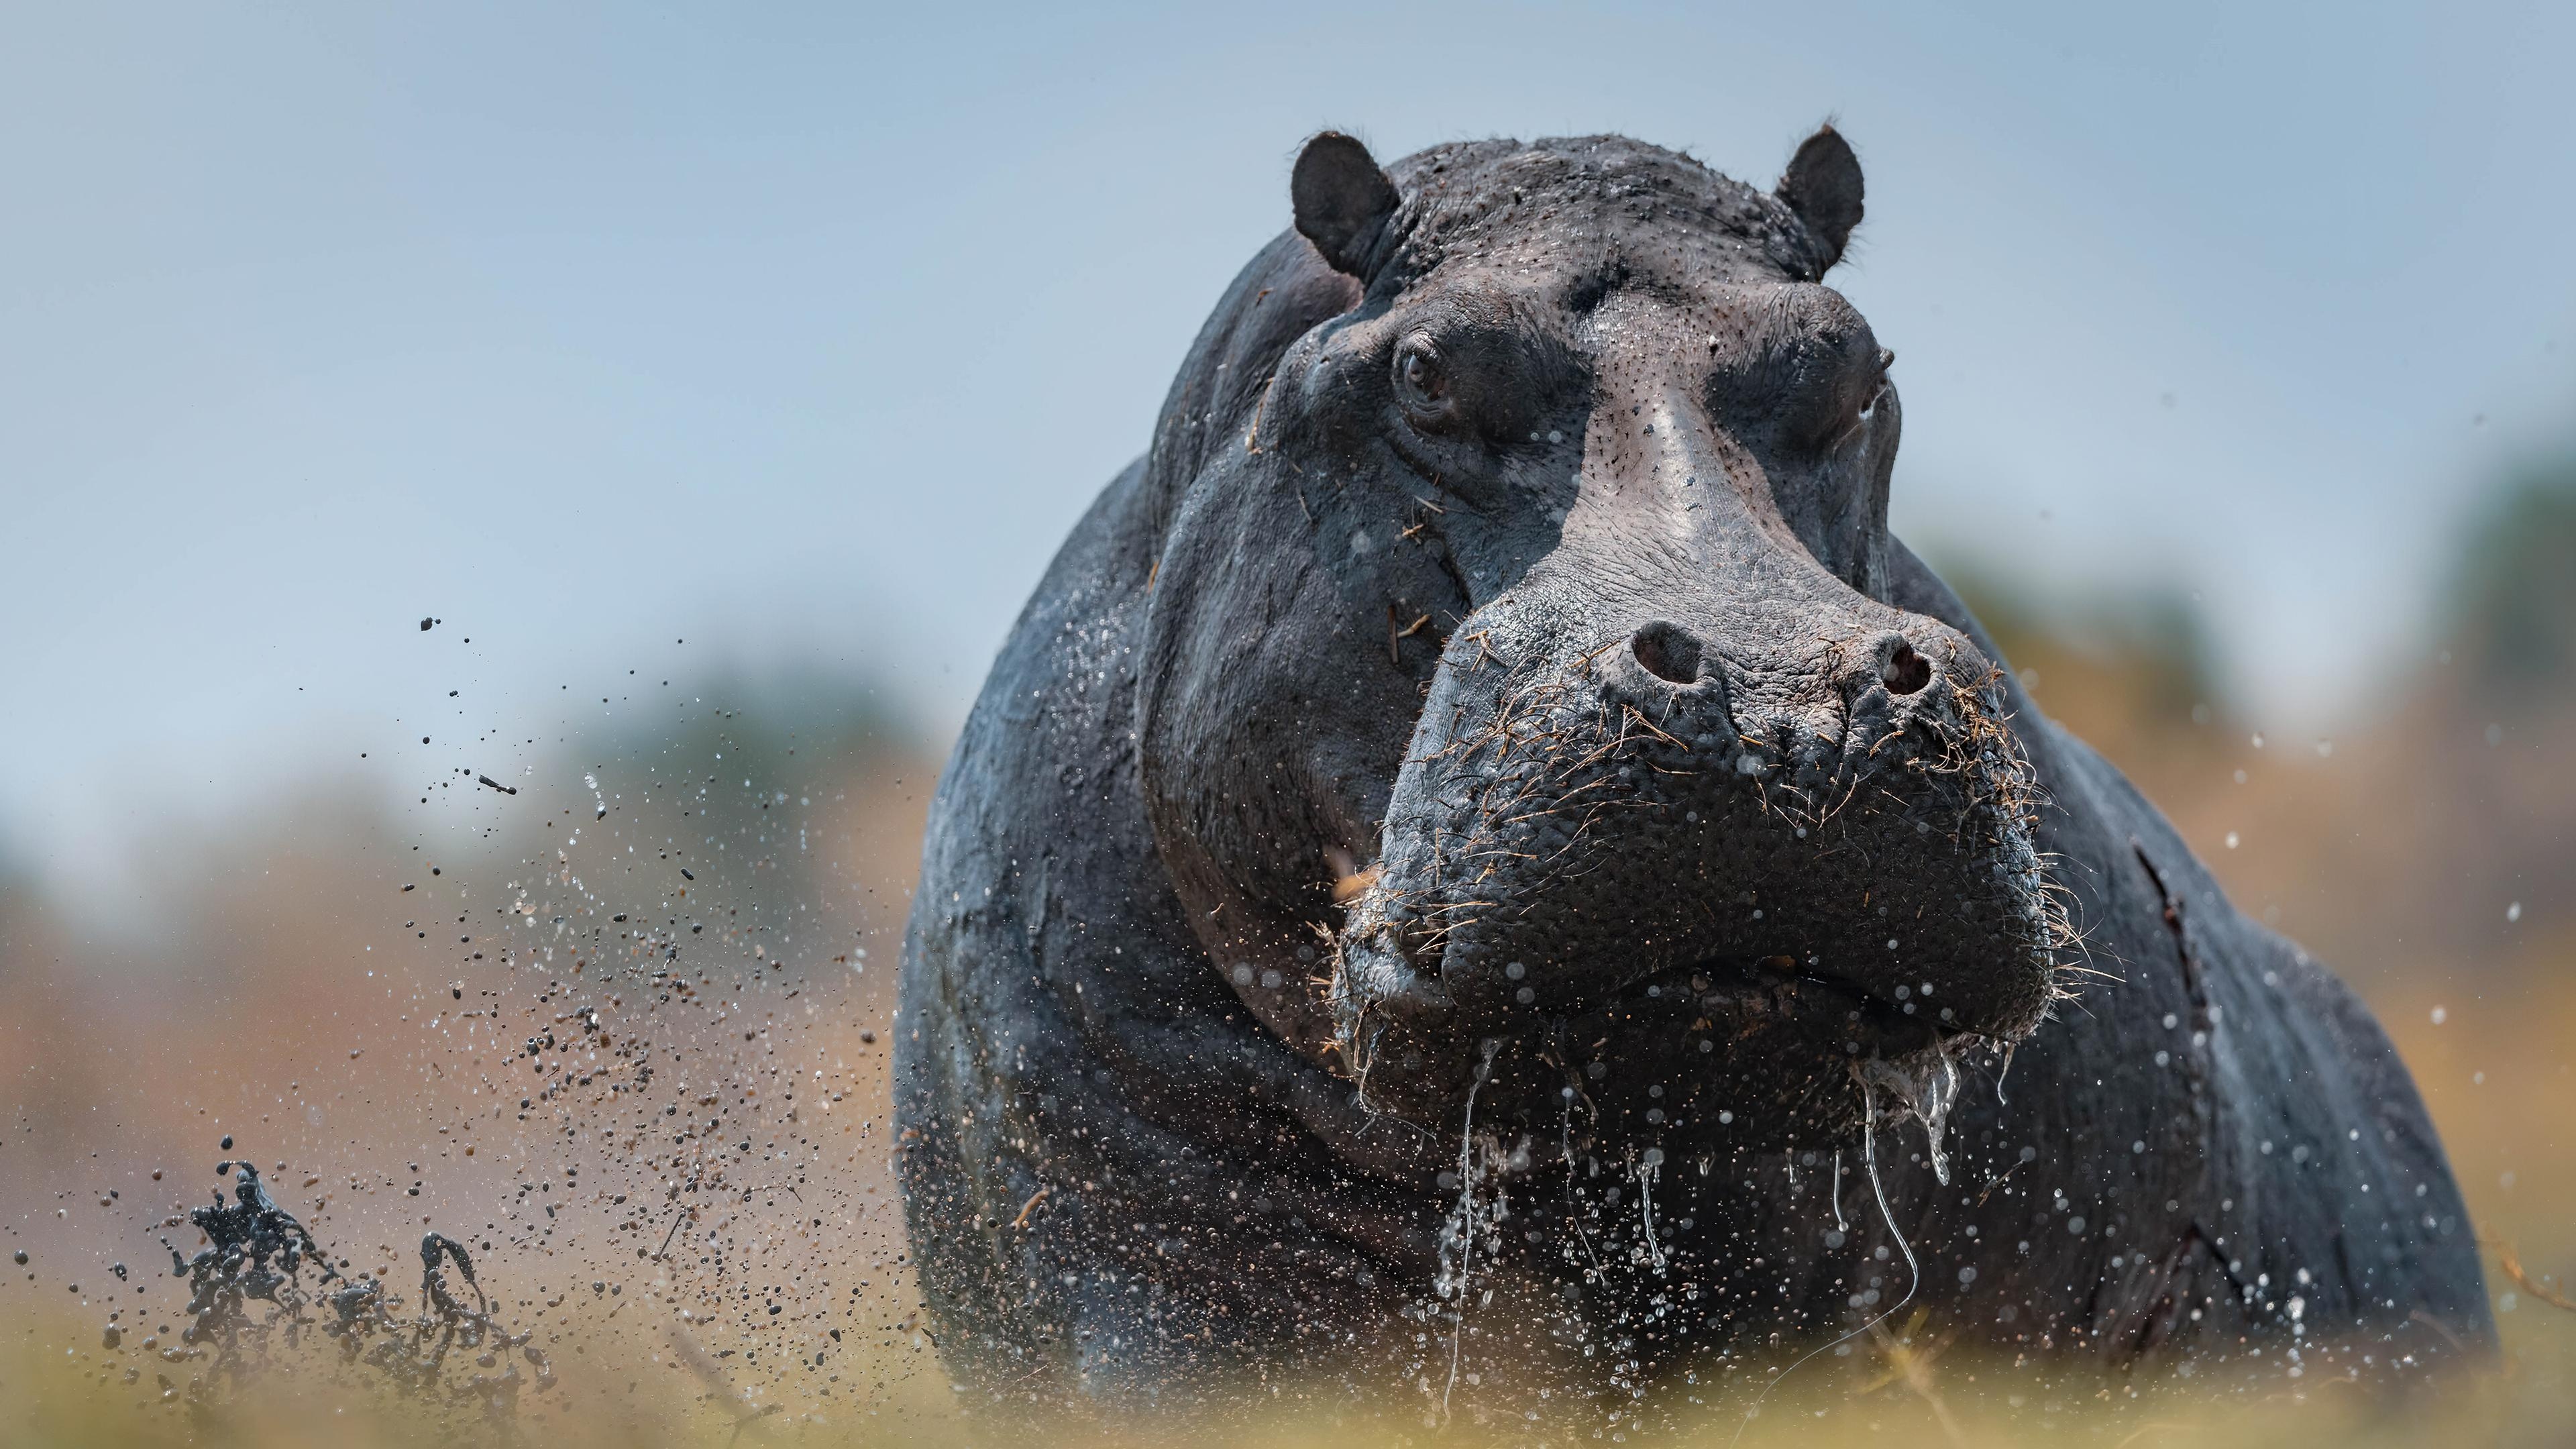 Hippo 4K ultra HD wallpaper, Breathtaking image, High-definition background, Wildlife beauty, 3840x2160 4K Desktop